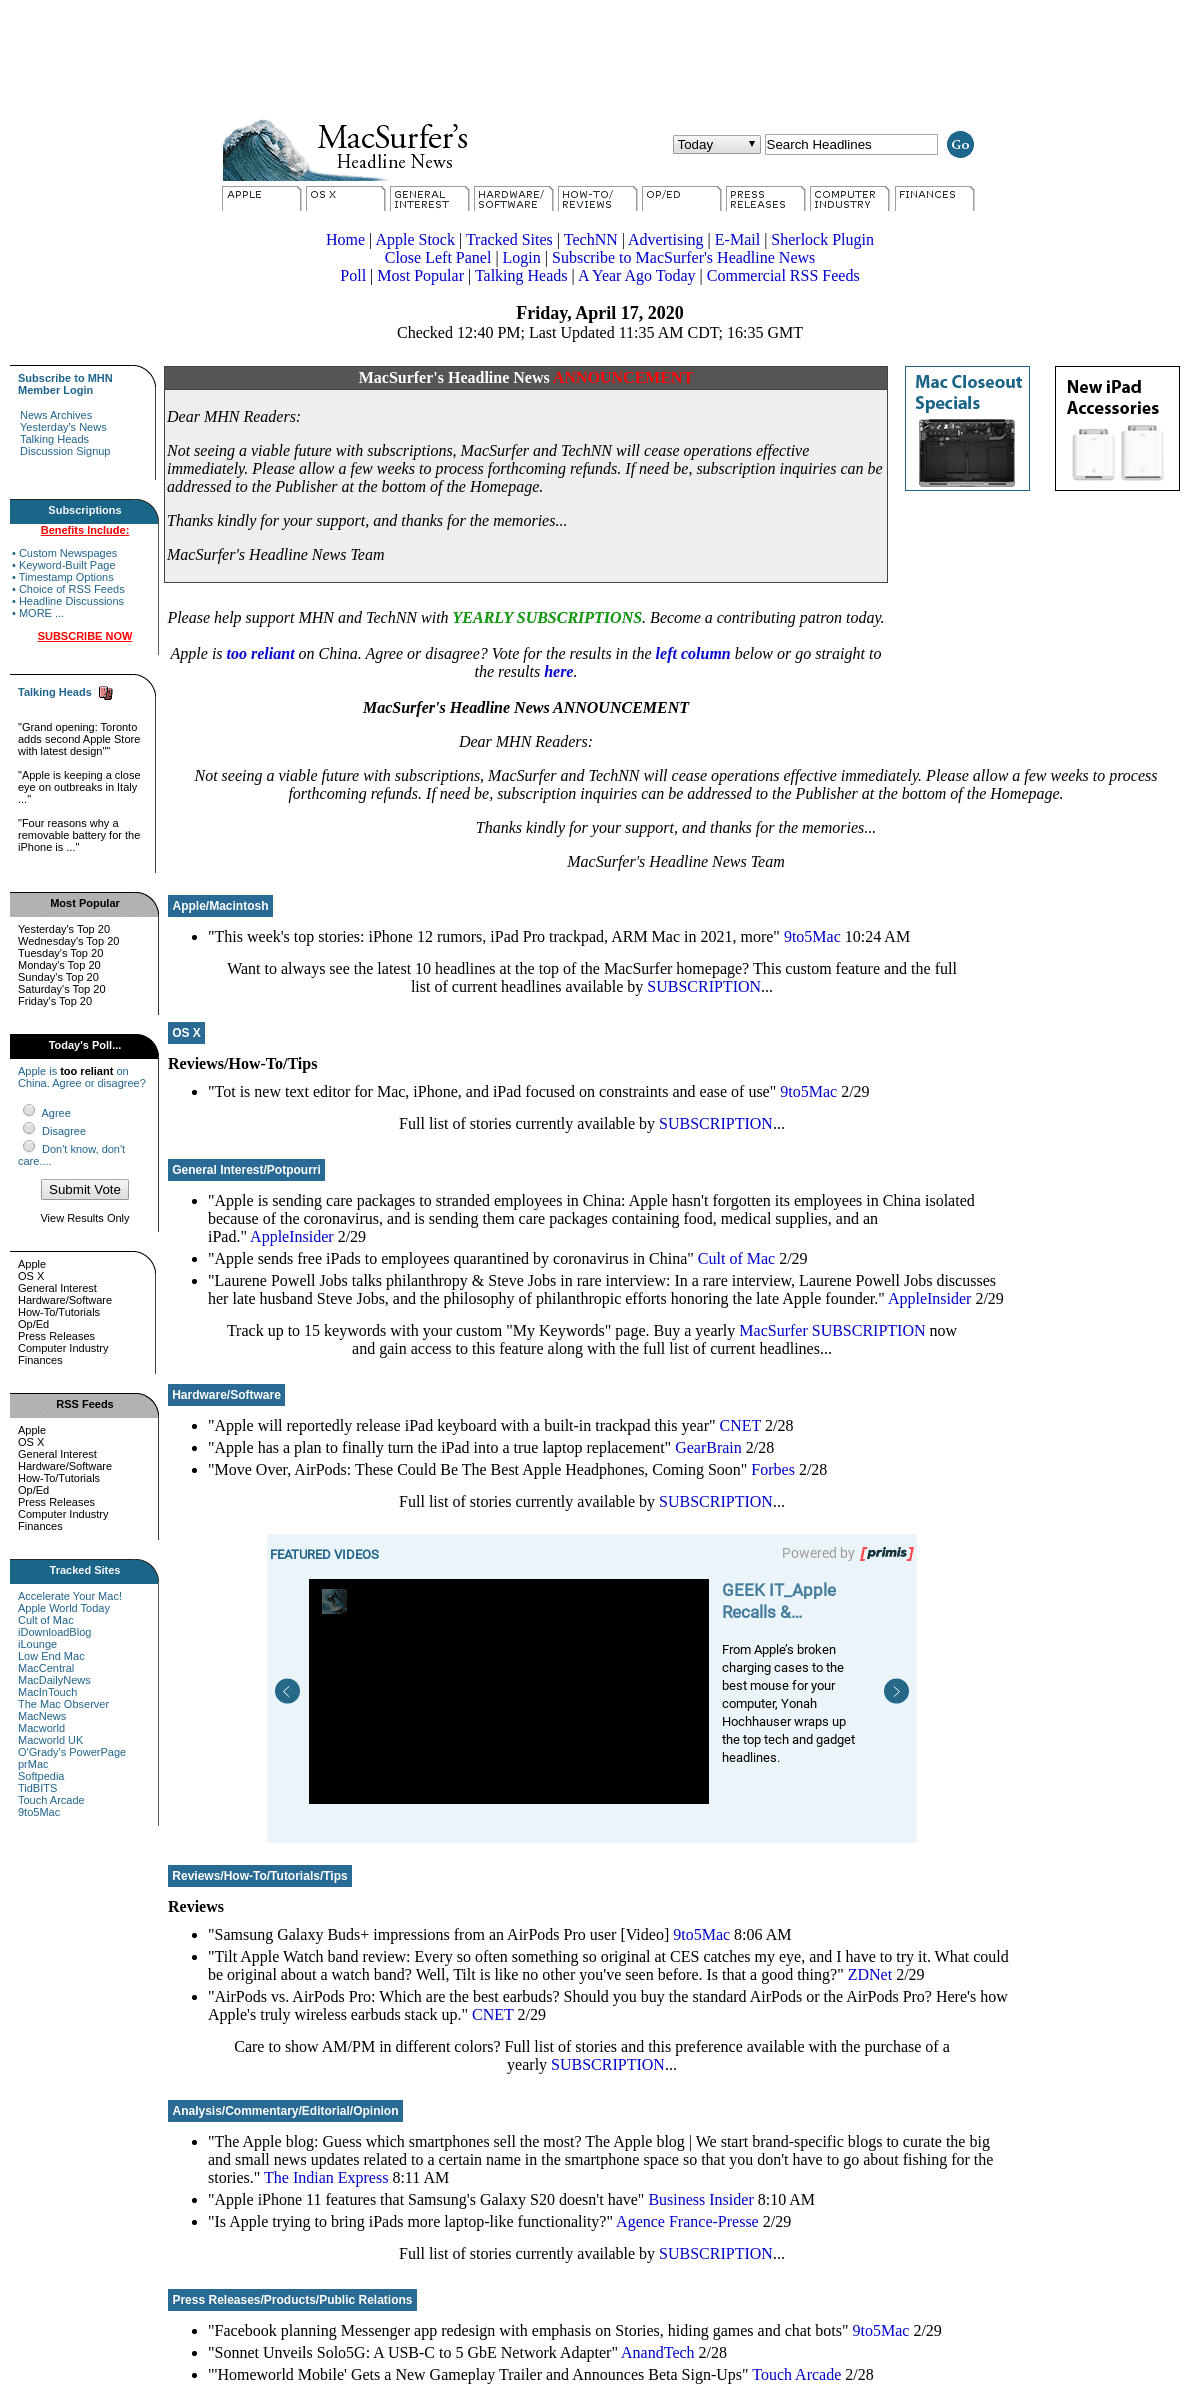 A complete backup of macsurfer.com